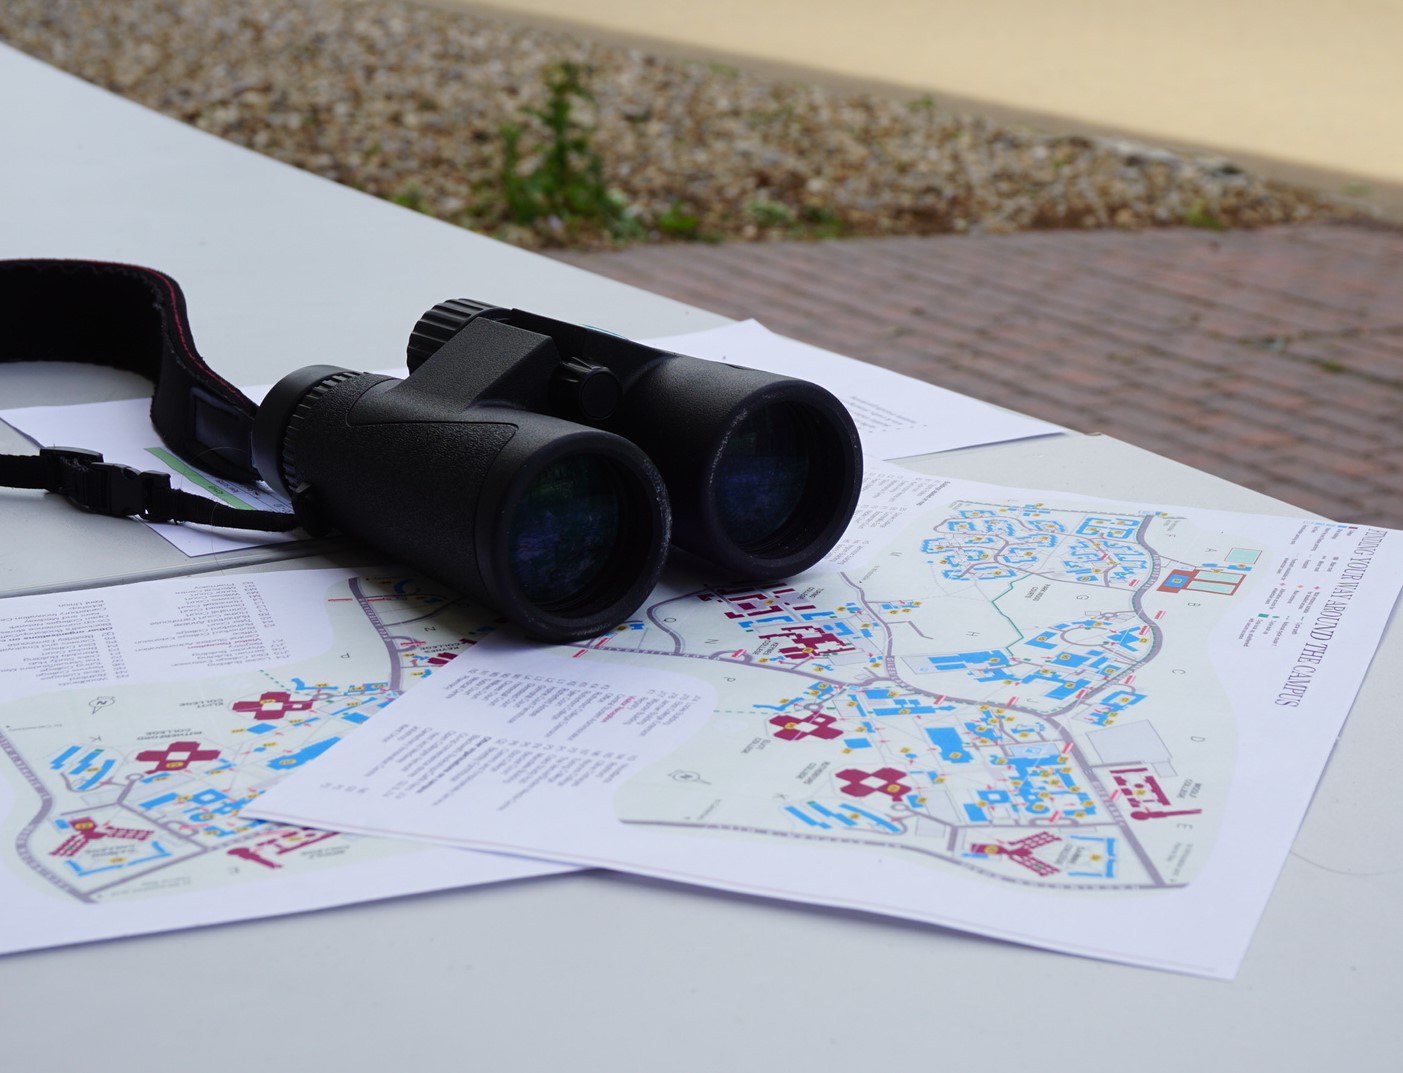 Binoculars and map